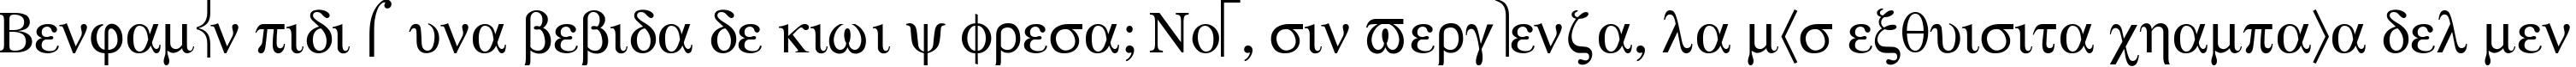 Пример написания шрифтом GreekMathSymbols Plain:001.003 текста на испанском